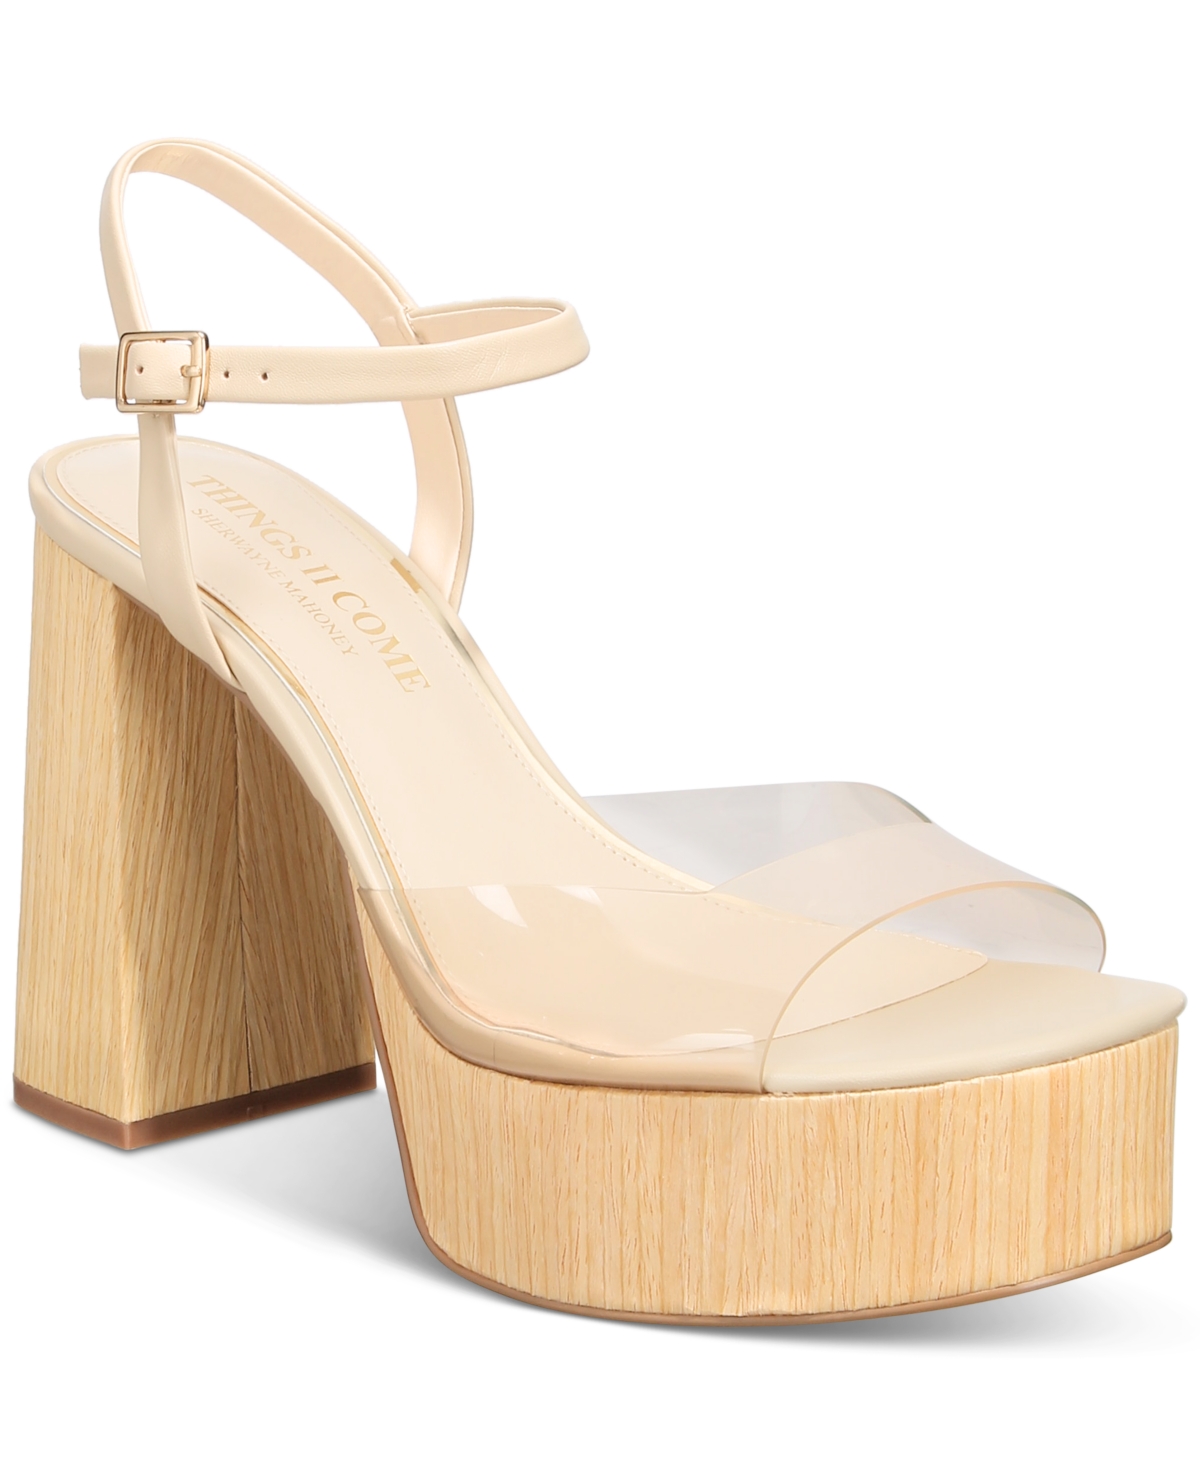 Things Ii Come Women's Daceywood Luxurious Wood Platform Sandals In Bone